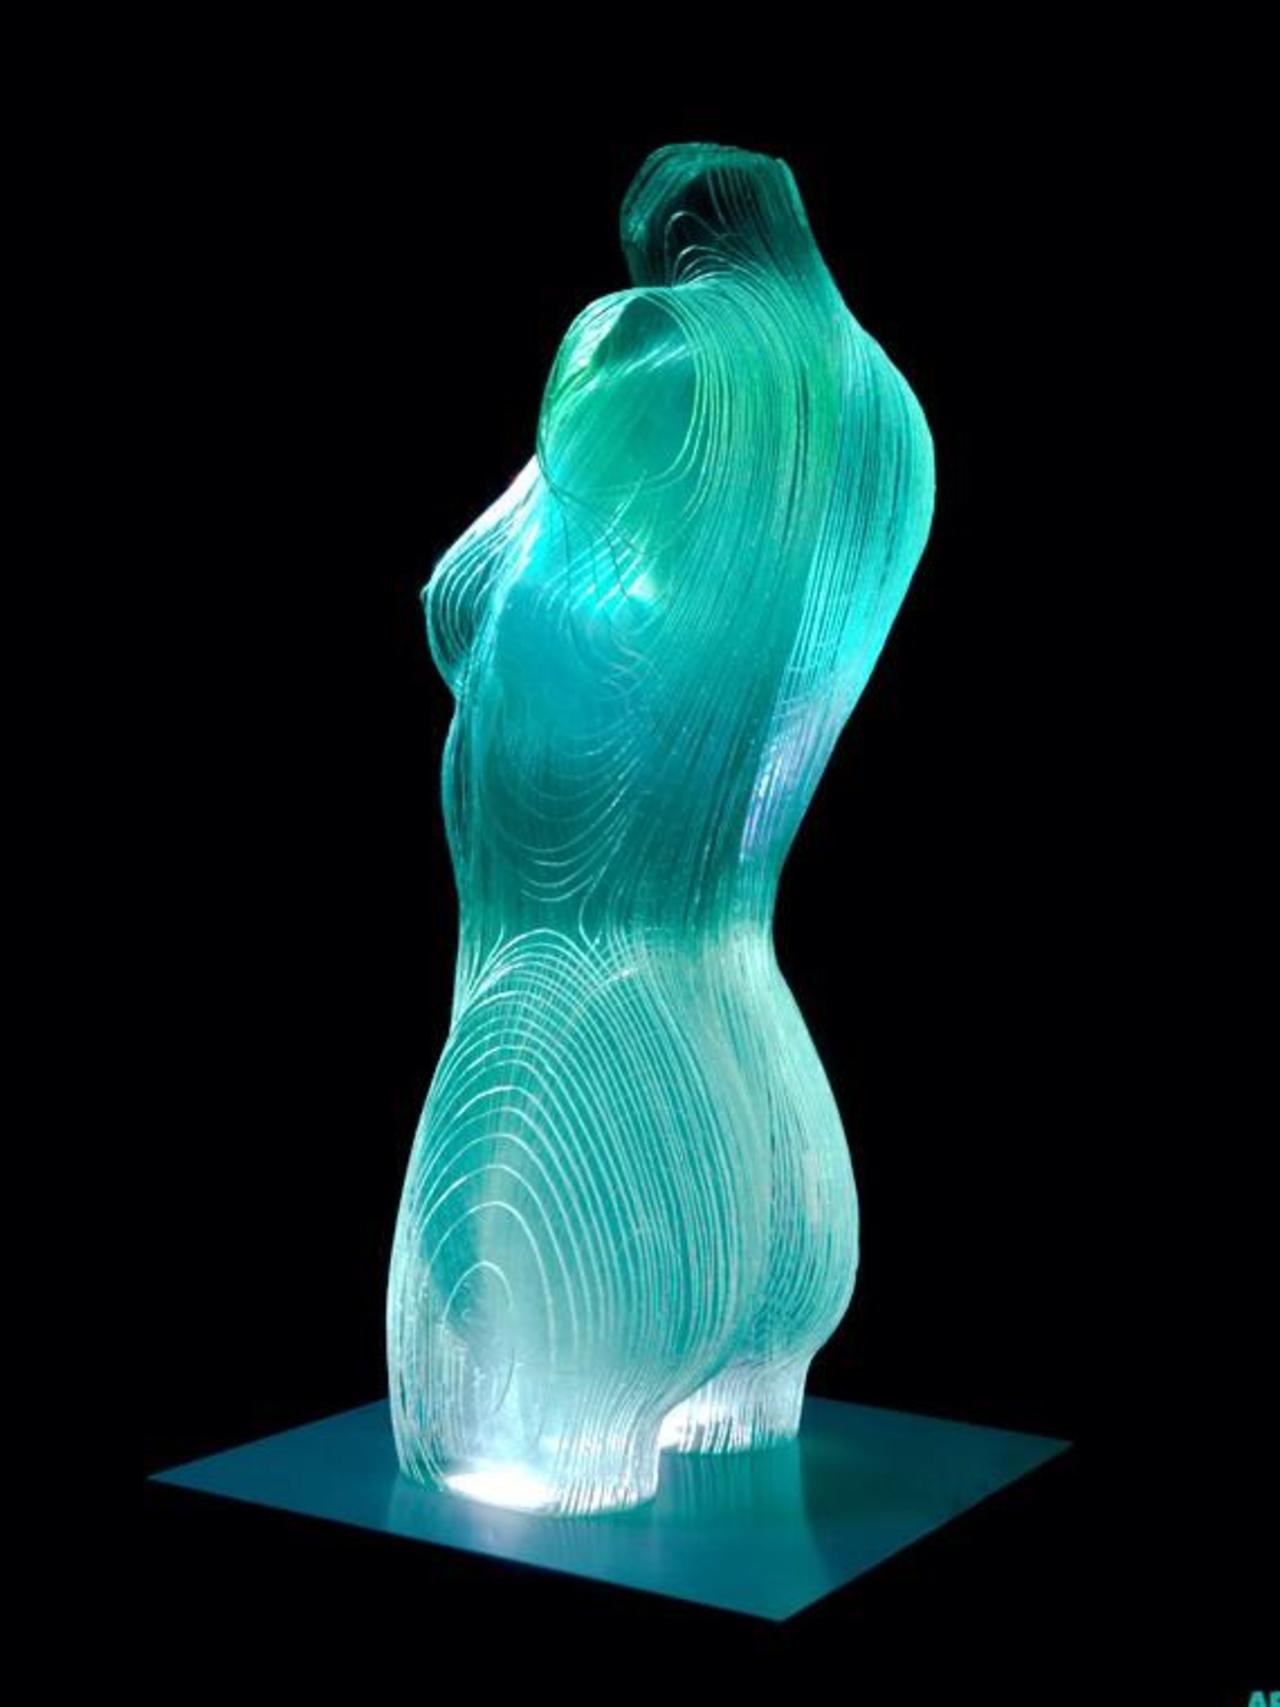 Glass sculptures by Ben Young
Via@Behance 
#sculpture #art #glass #Australia #photography http://t.co/ntBSdh6fmI